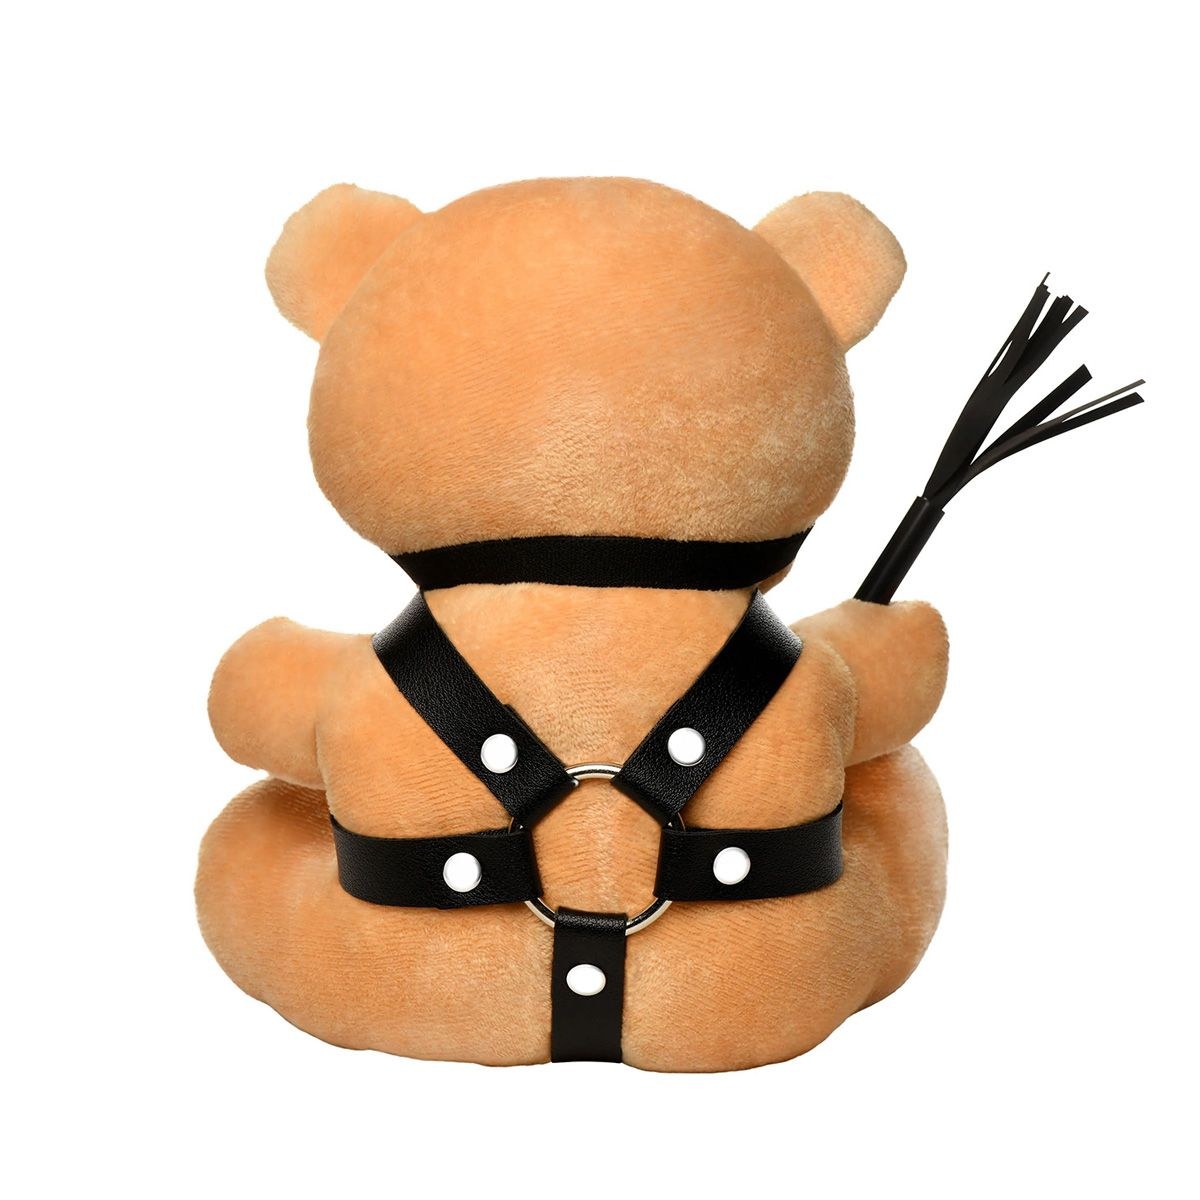 BDSM kinky bear 21 cm